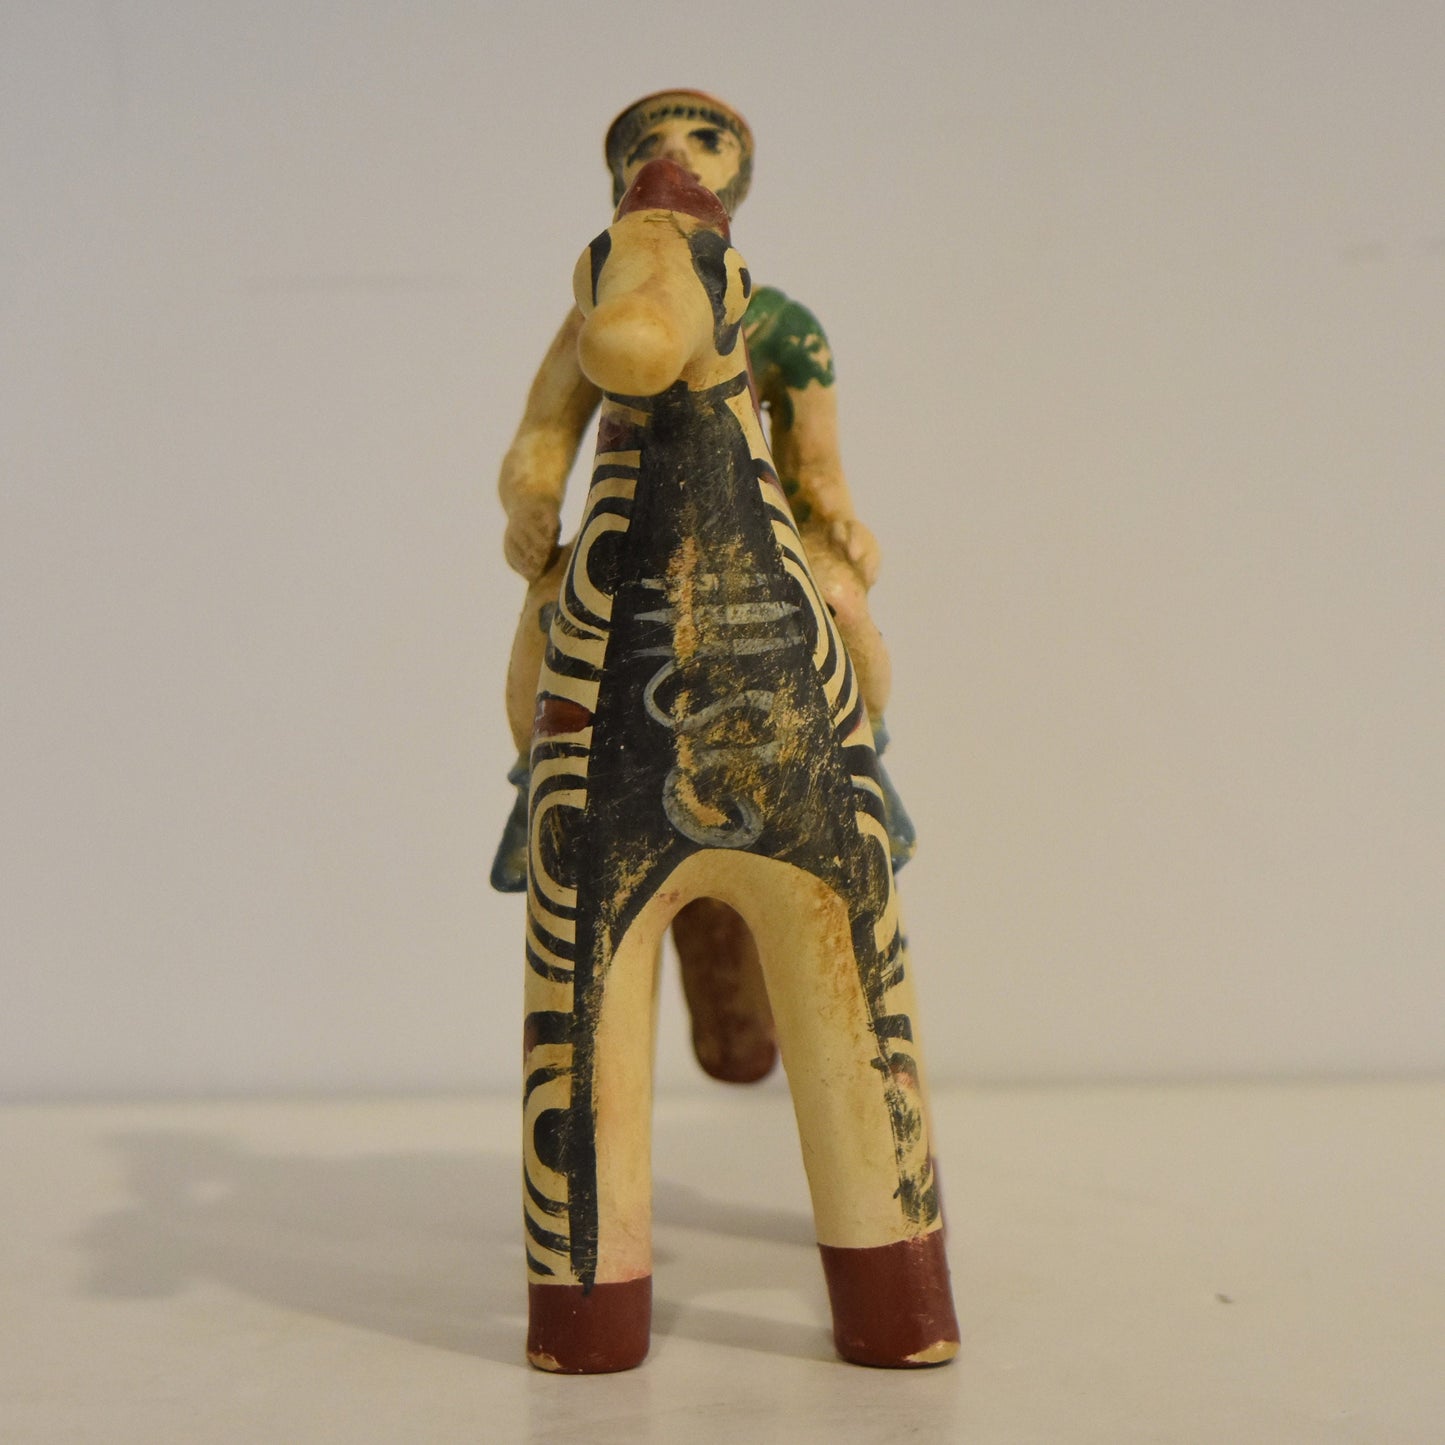 Horse Rider - Athens, Attica - 500 BC - Symbol of  Courage, Integrity, Power - Miniature - Museum Reproduction  - Ceramic Artifact